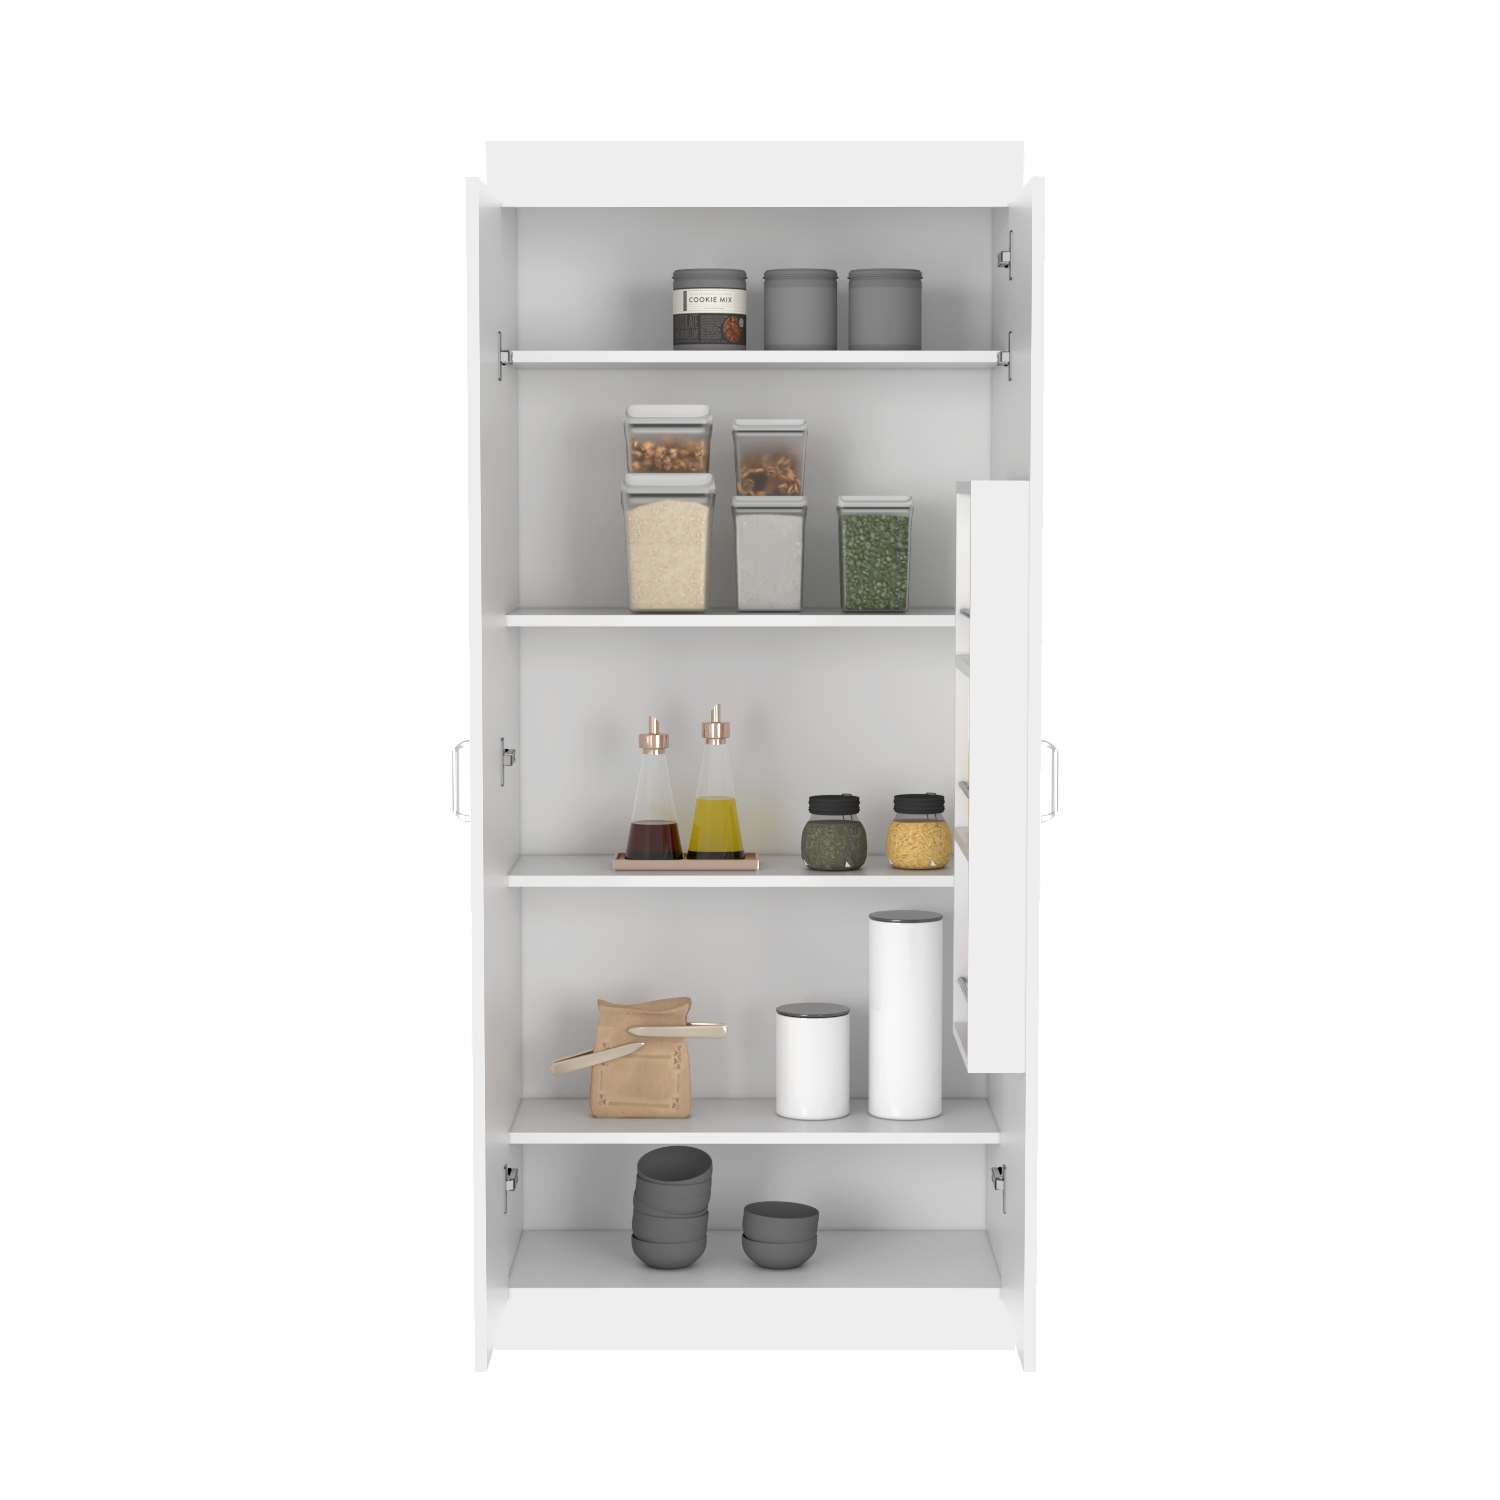 Pantry Cabinet Orlando, Five Shelves, White Finish